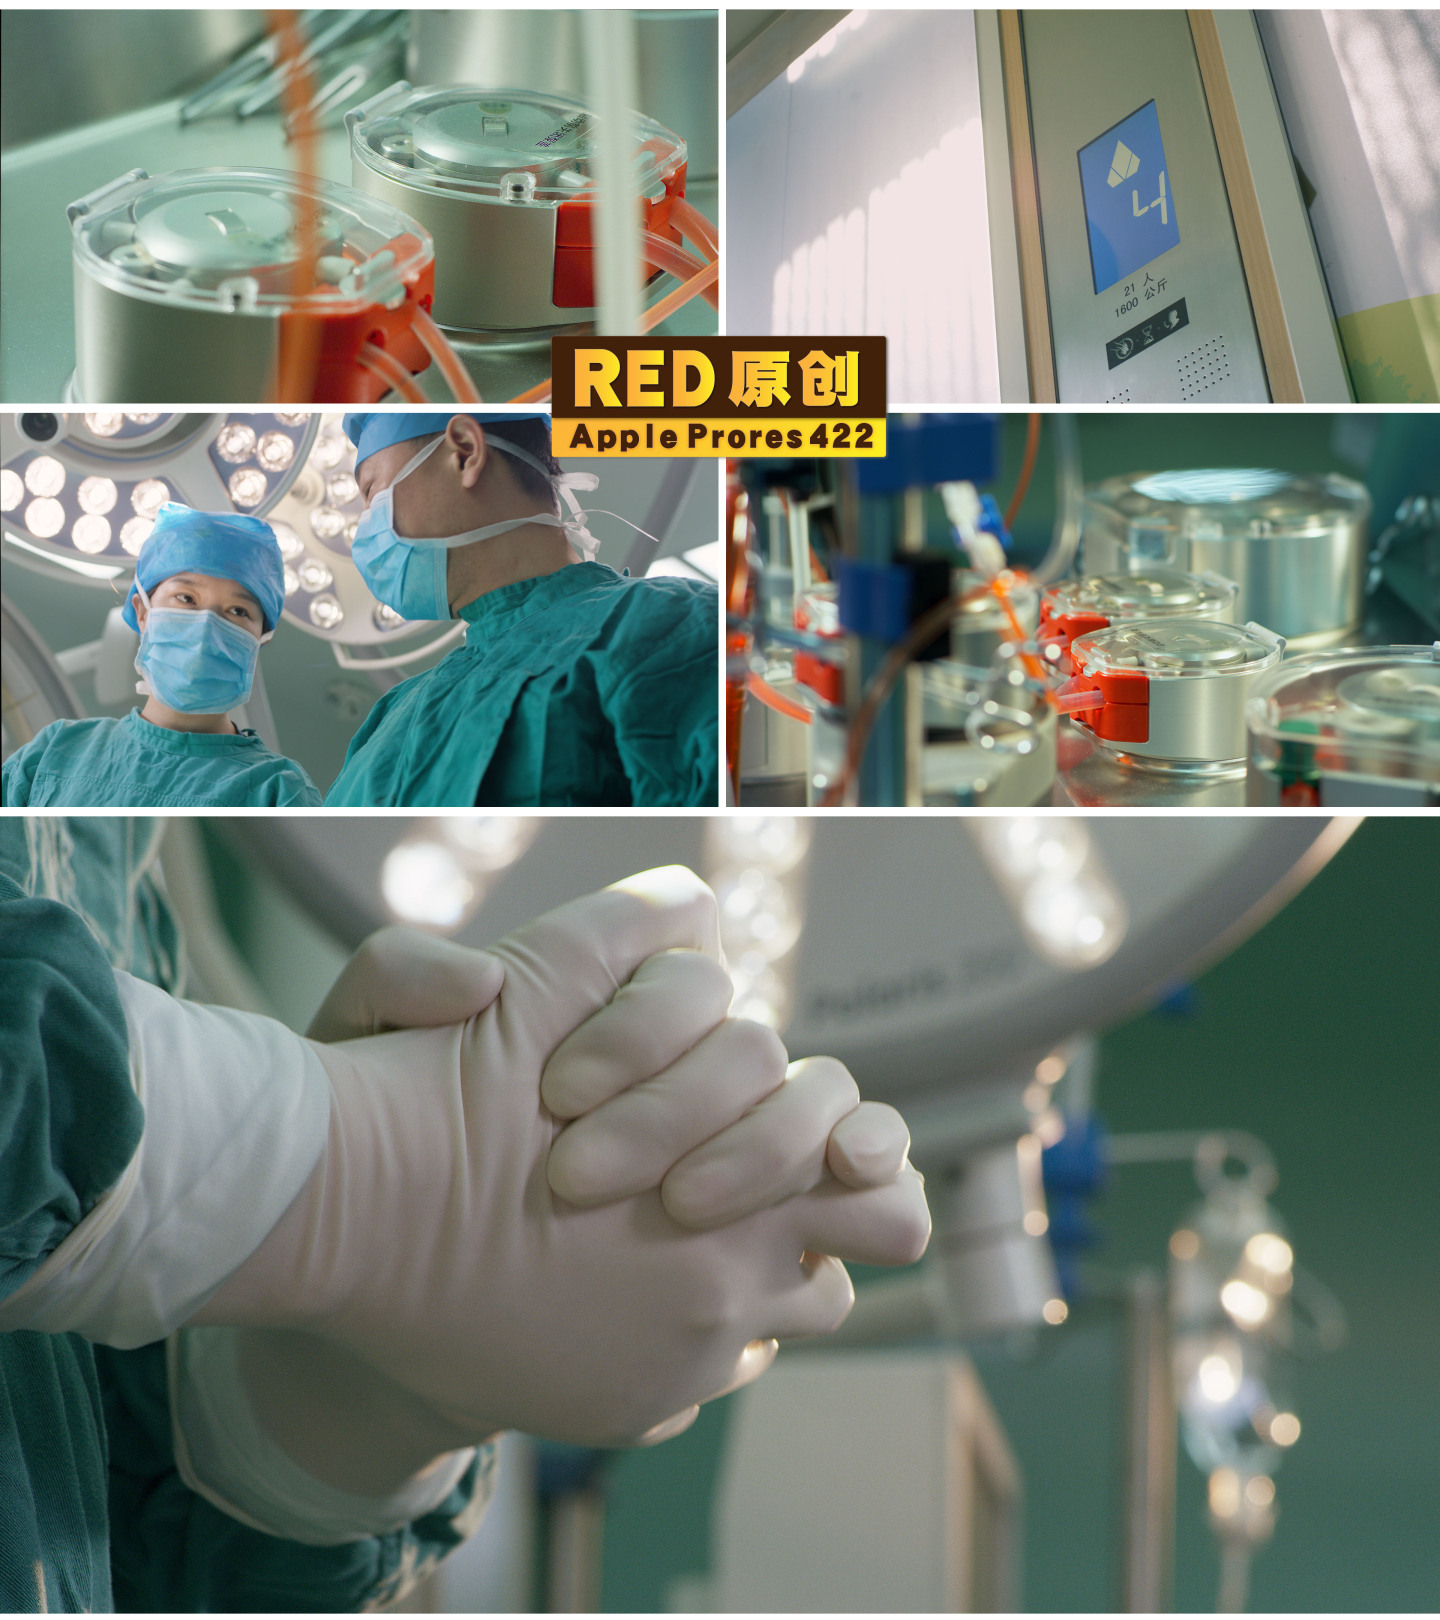 「RED拍摄」深夜救护转运抢救手术一组